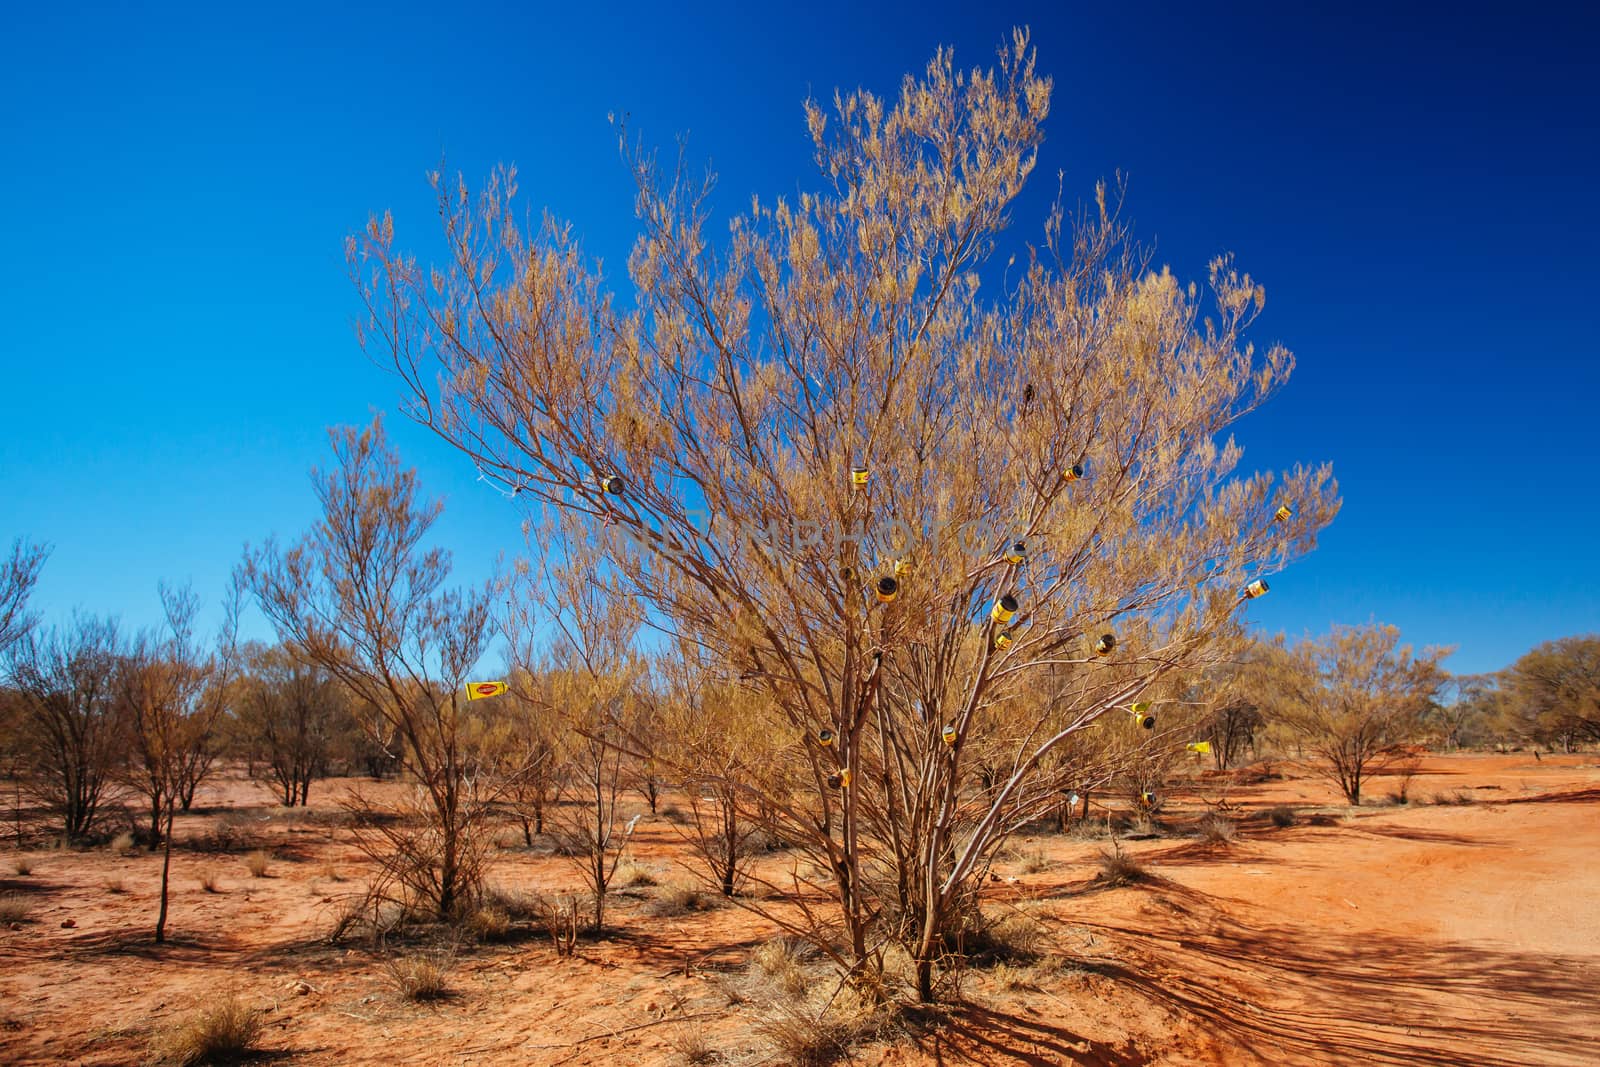 Vegemite Tree in Northern Territory Australia by FiledIMAGE